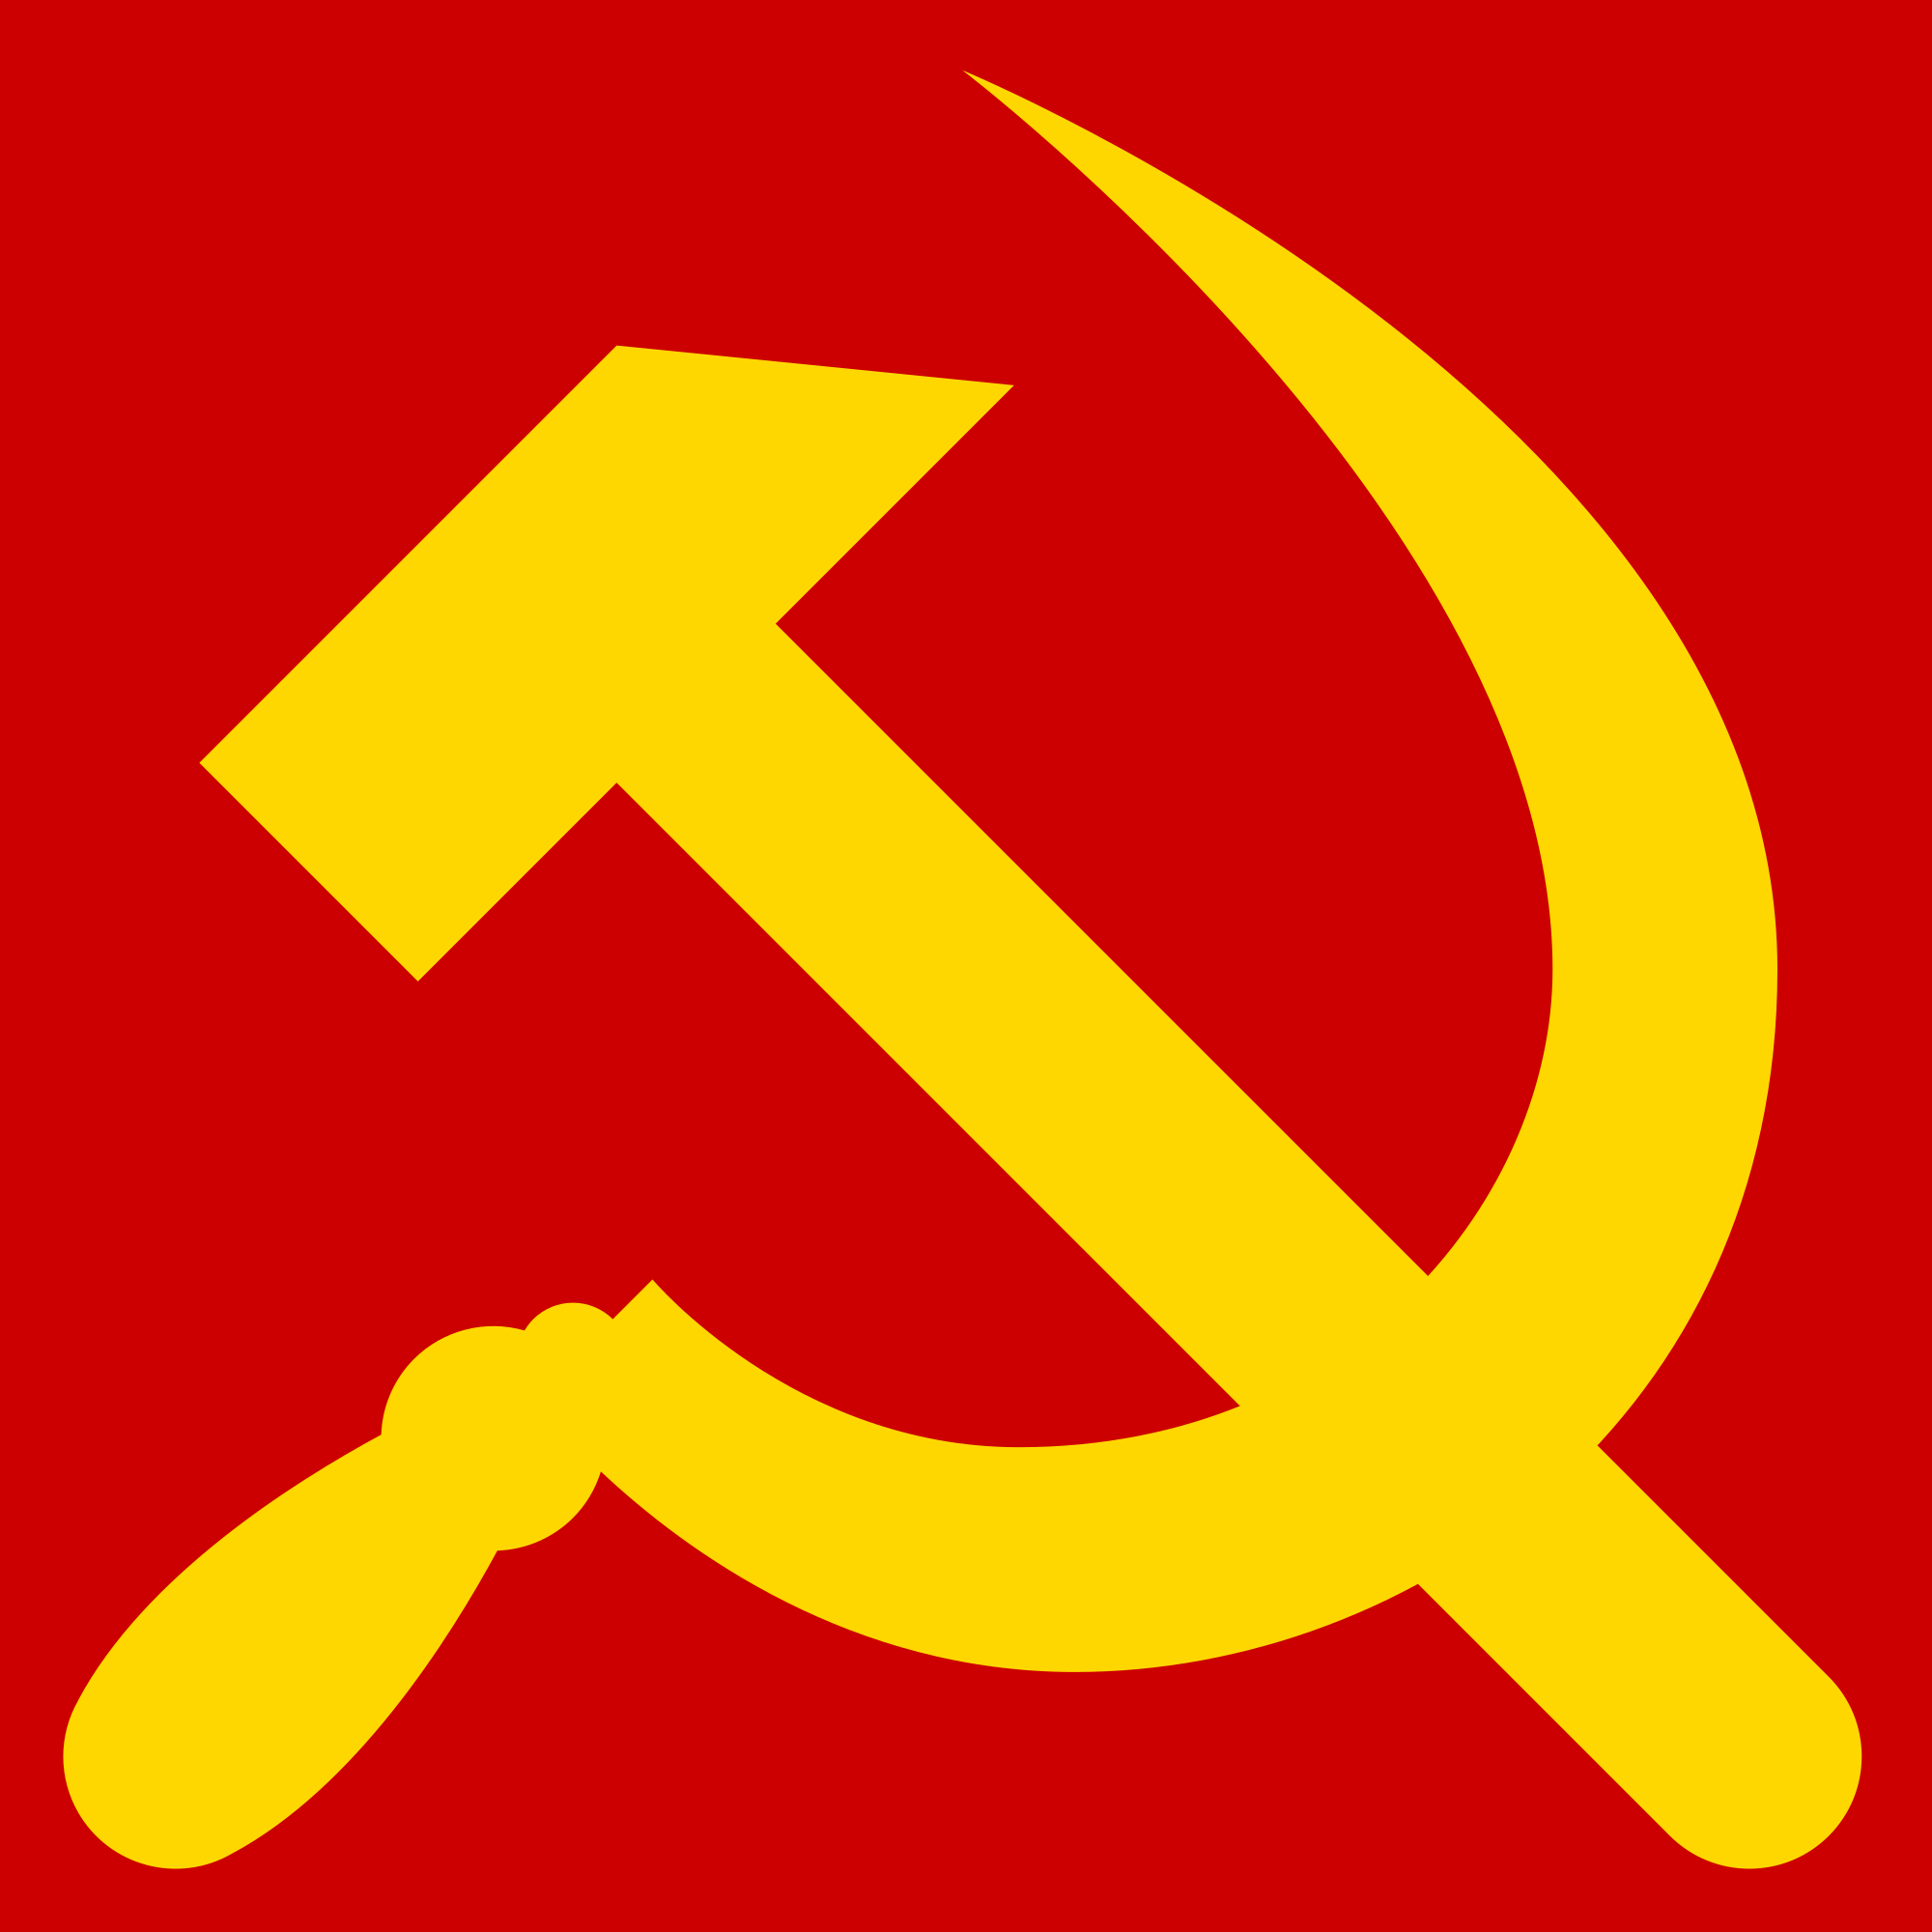 Серп и молот символ коммунизма